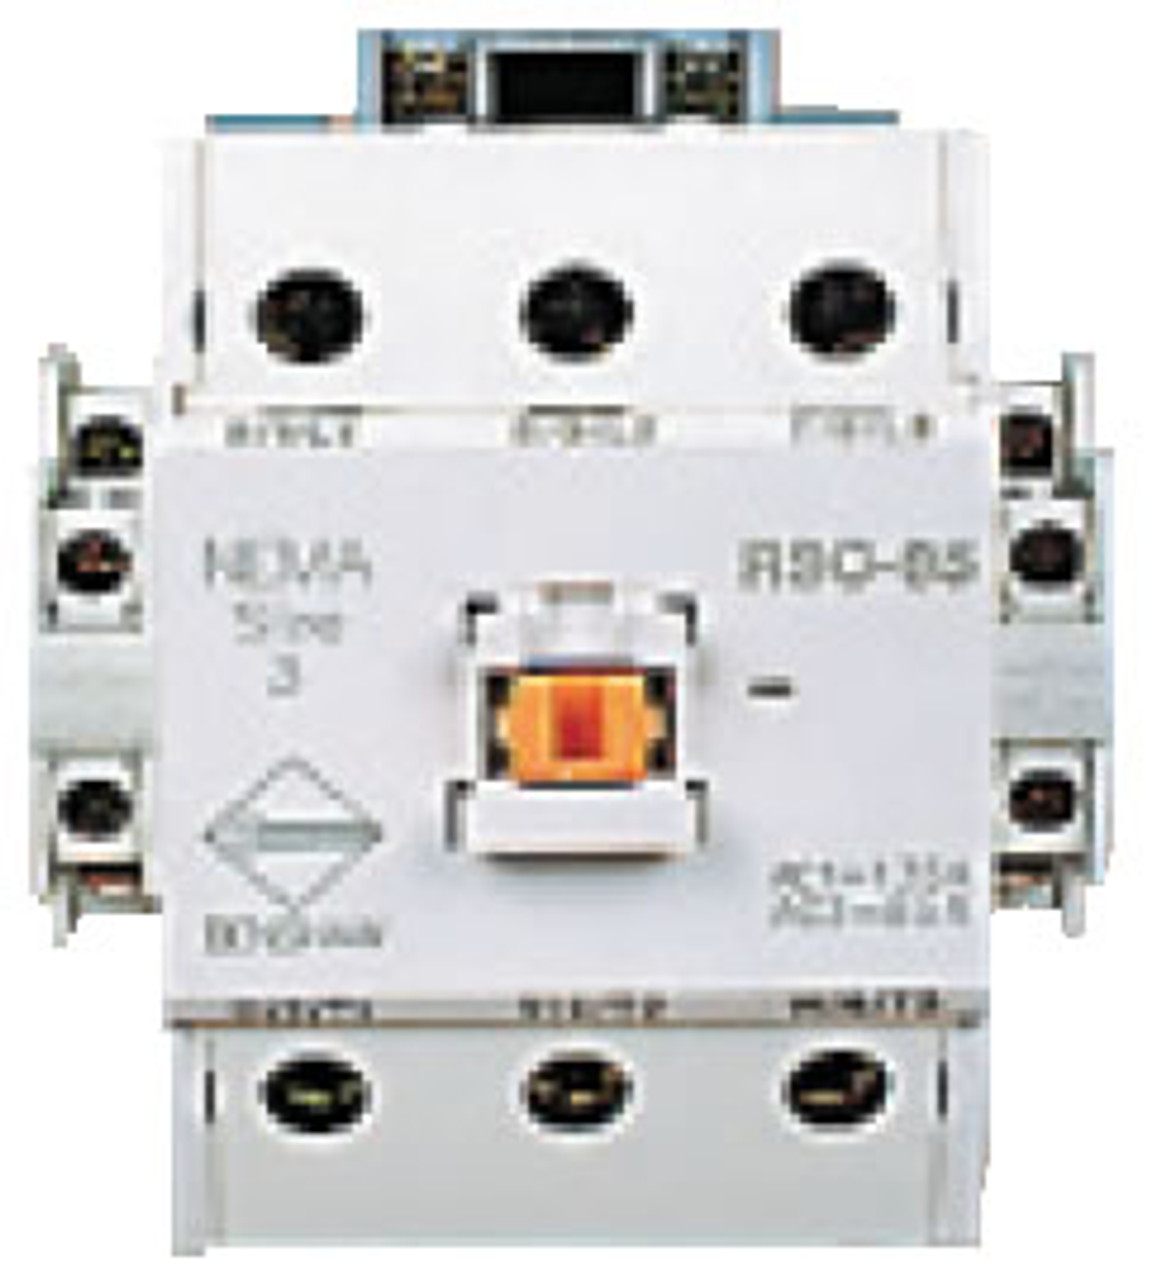 Benshaw RSC-85-6AC24 contactor